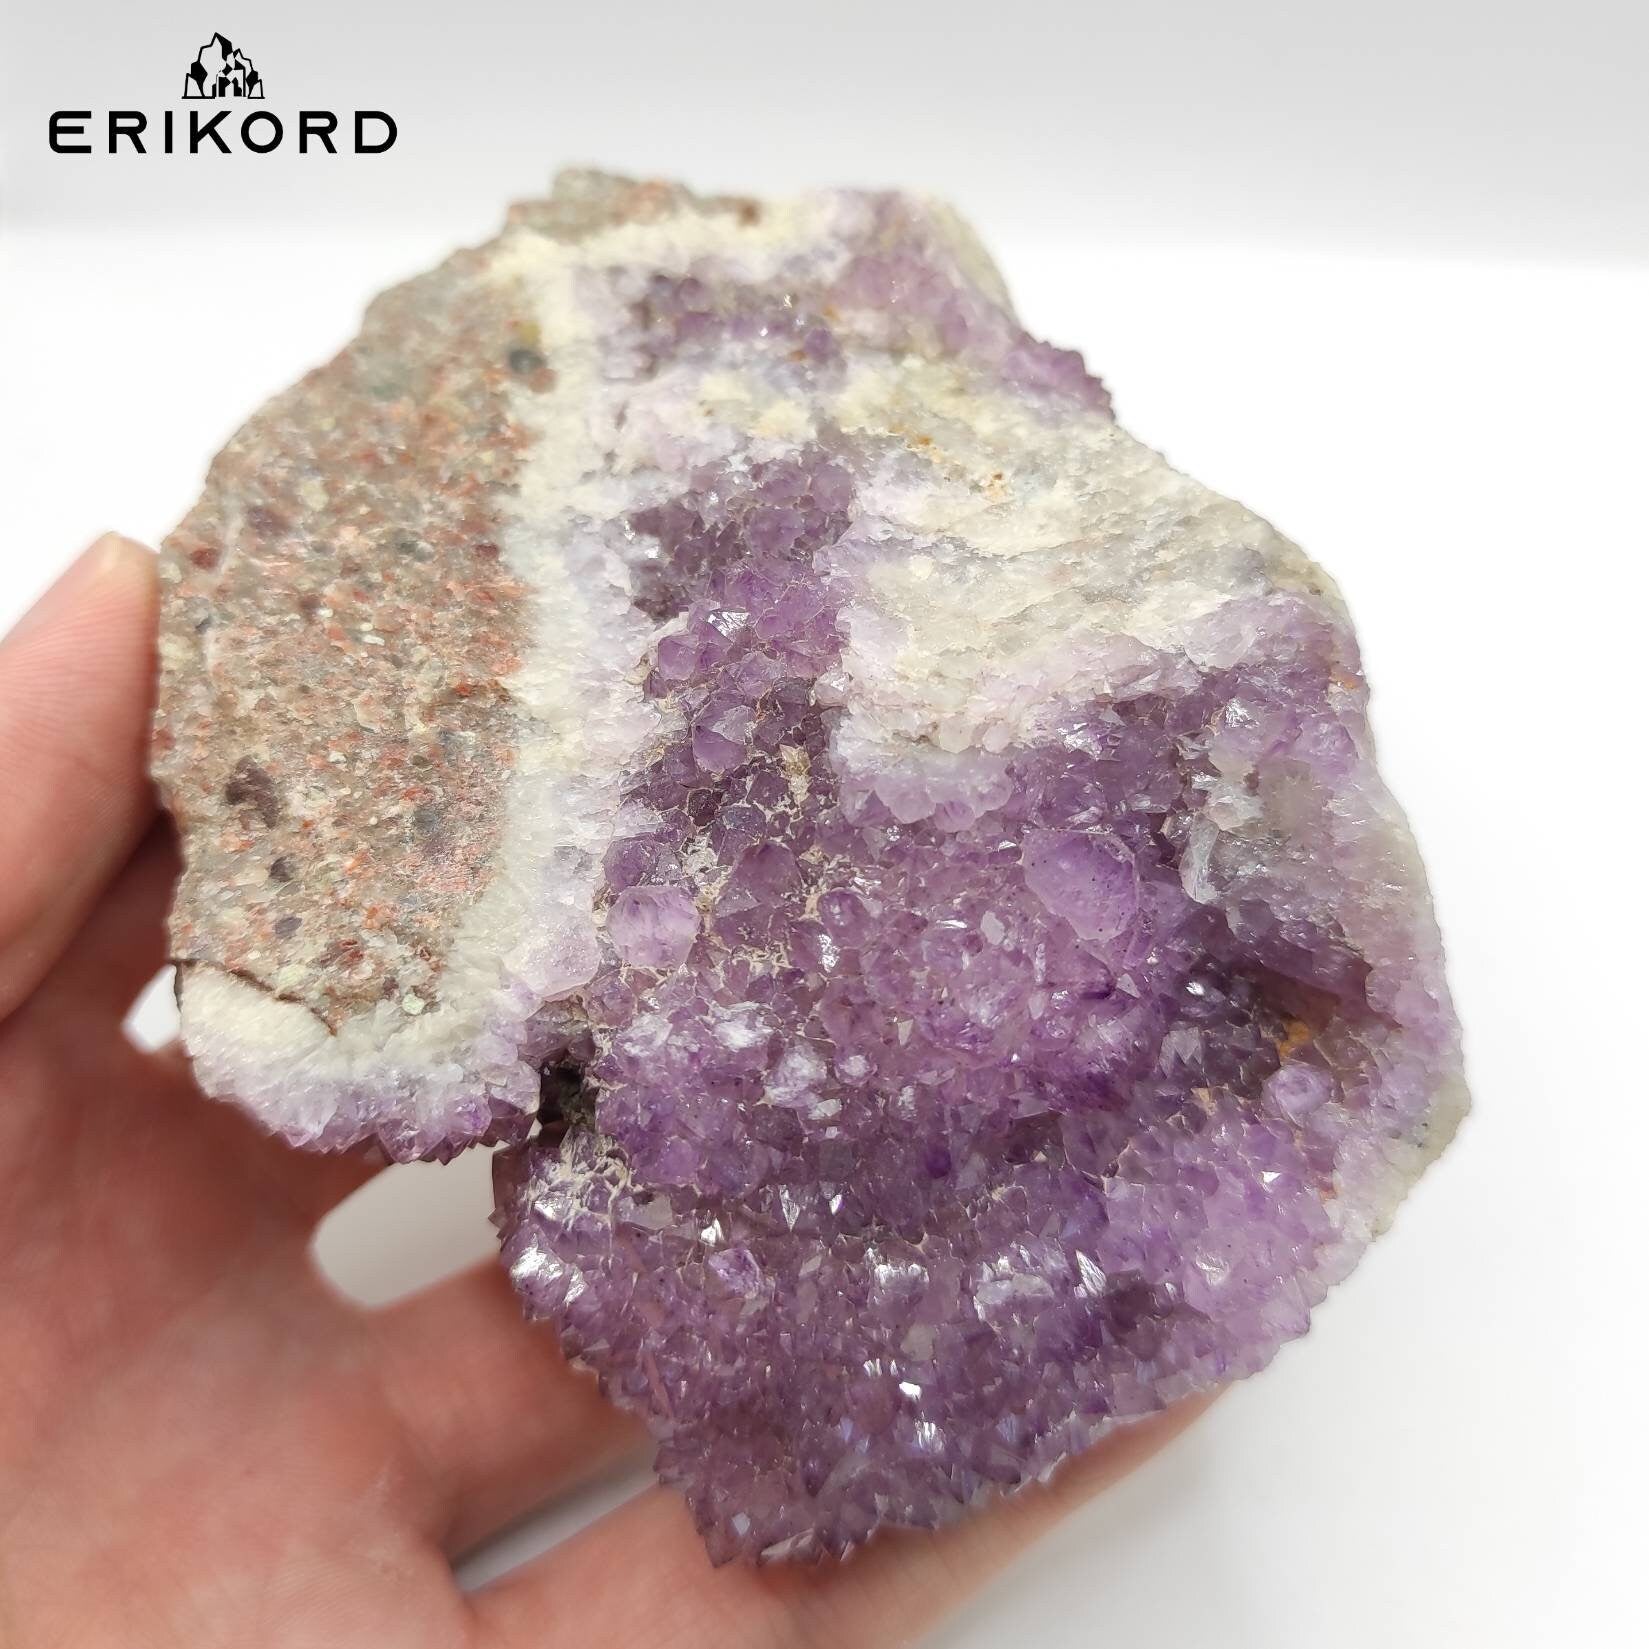 325g Thunder Bay Amethyst Crystal - Natural Amethyst Mineral Specimen - Ontario Canada - Spirit Quartz Style Amethyst - Raw Ethical Crystals